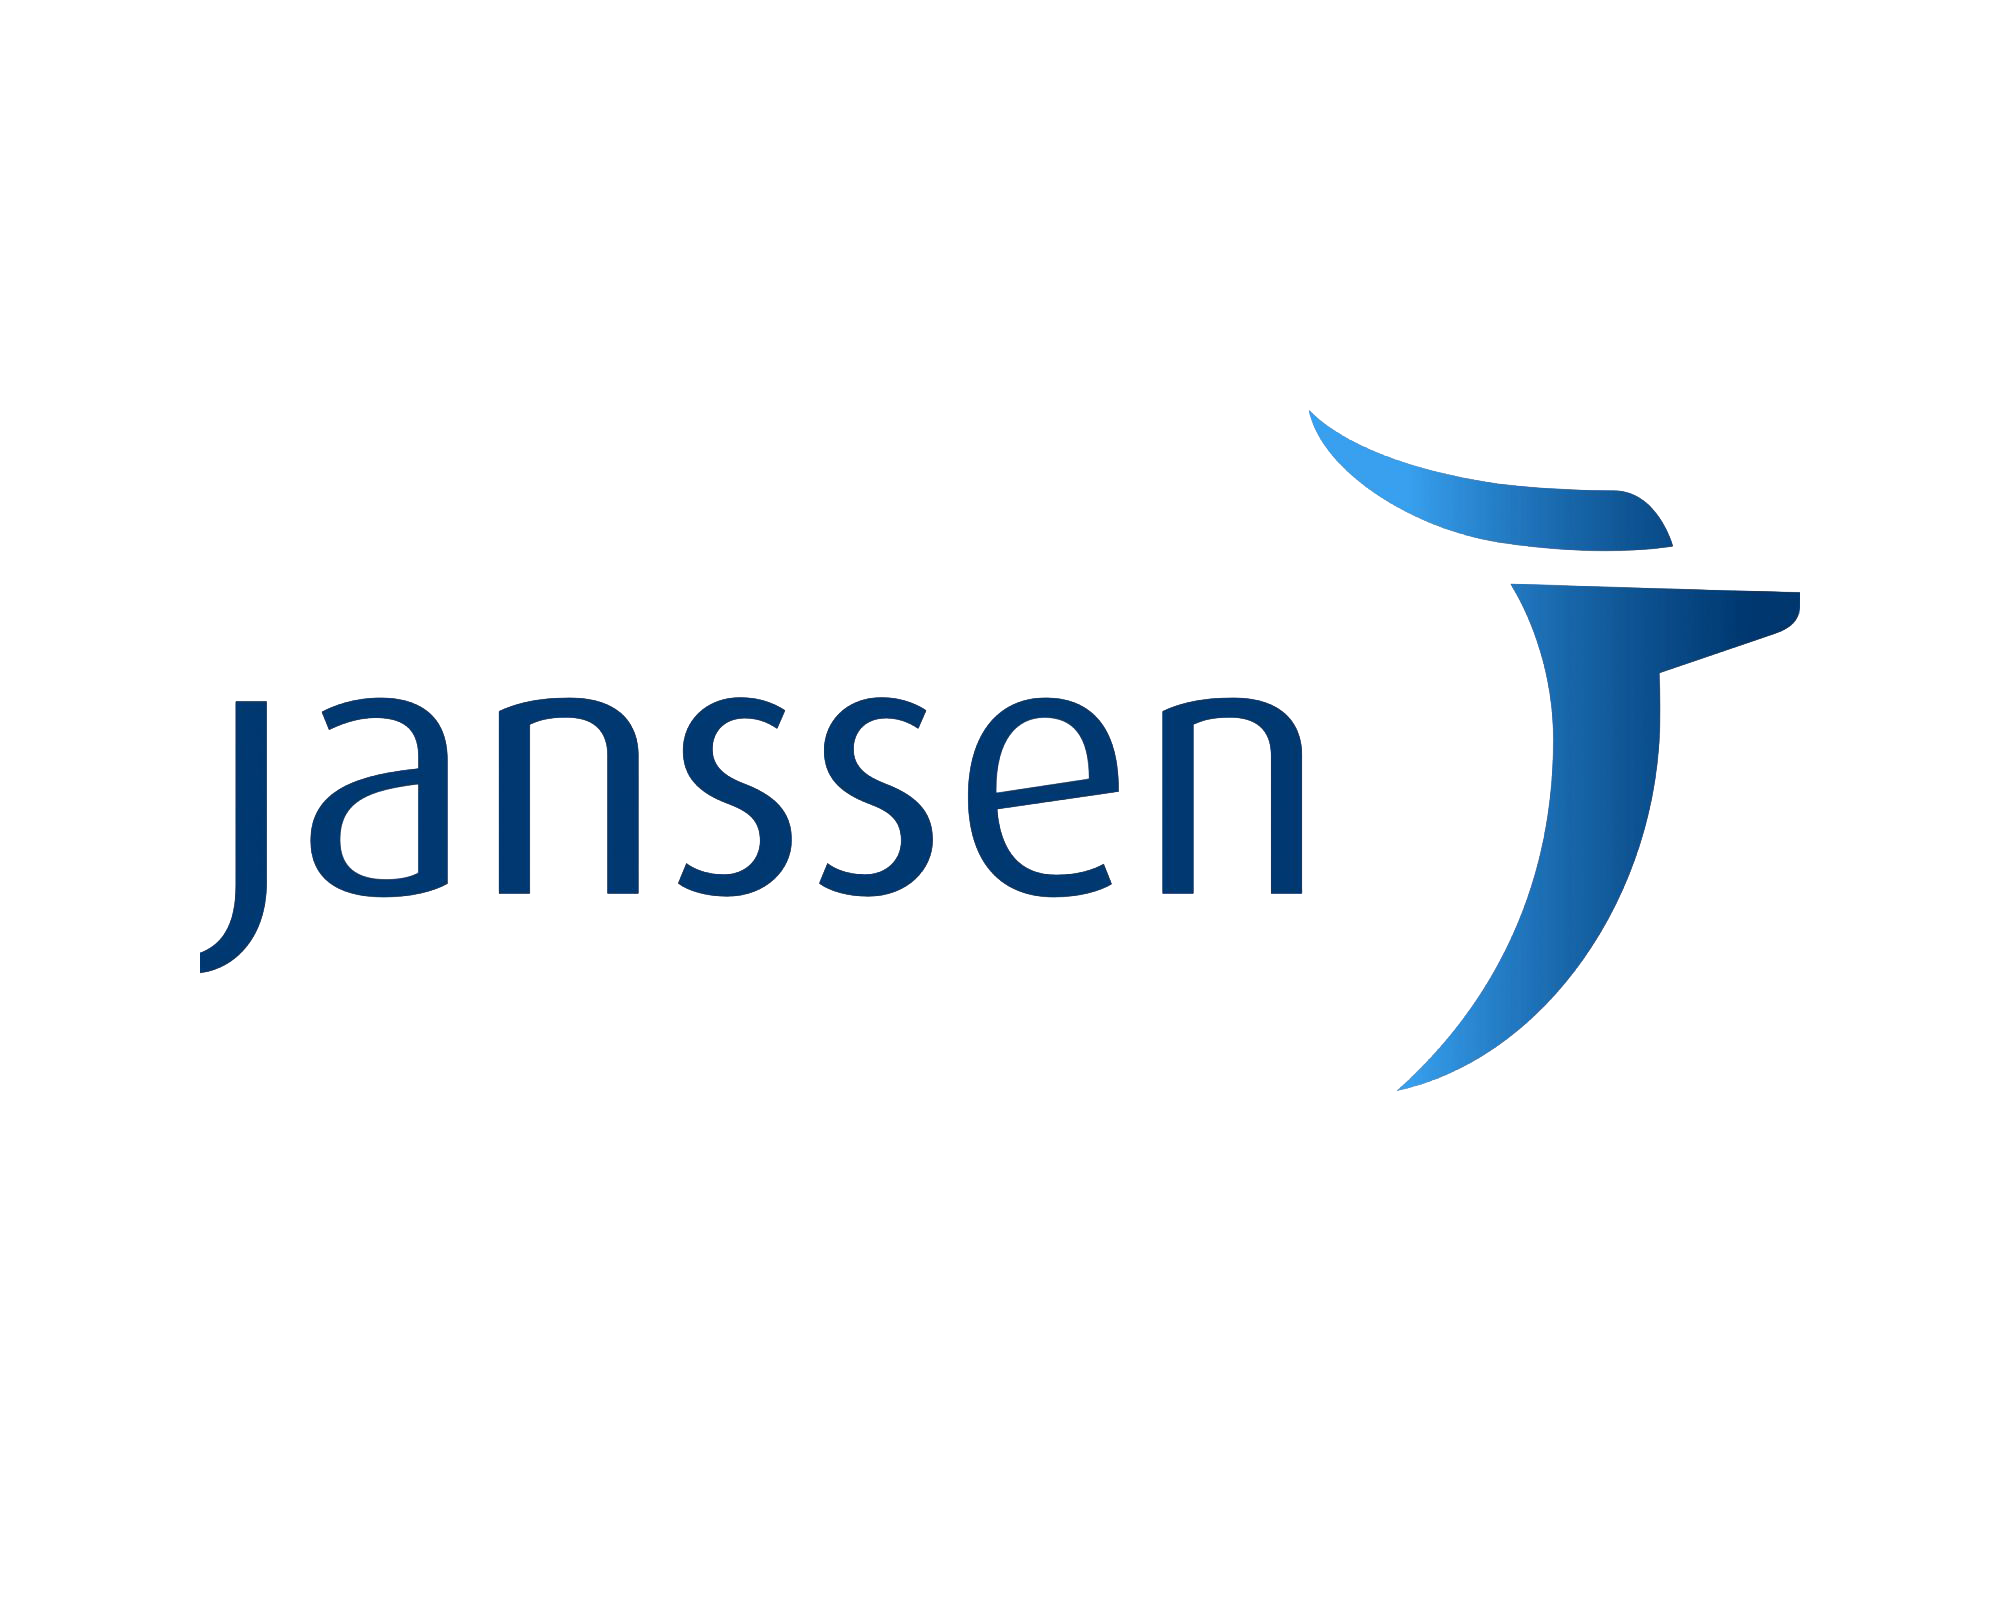 Janssen-logo-2012.png